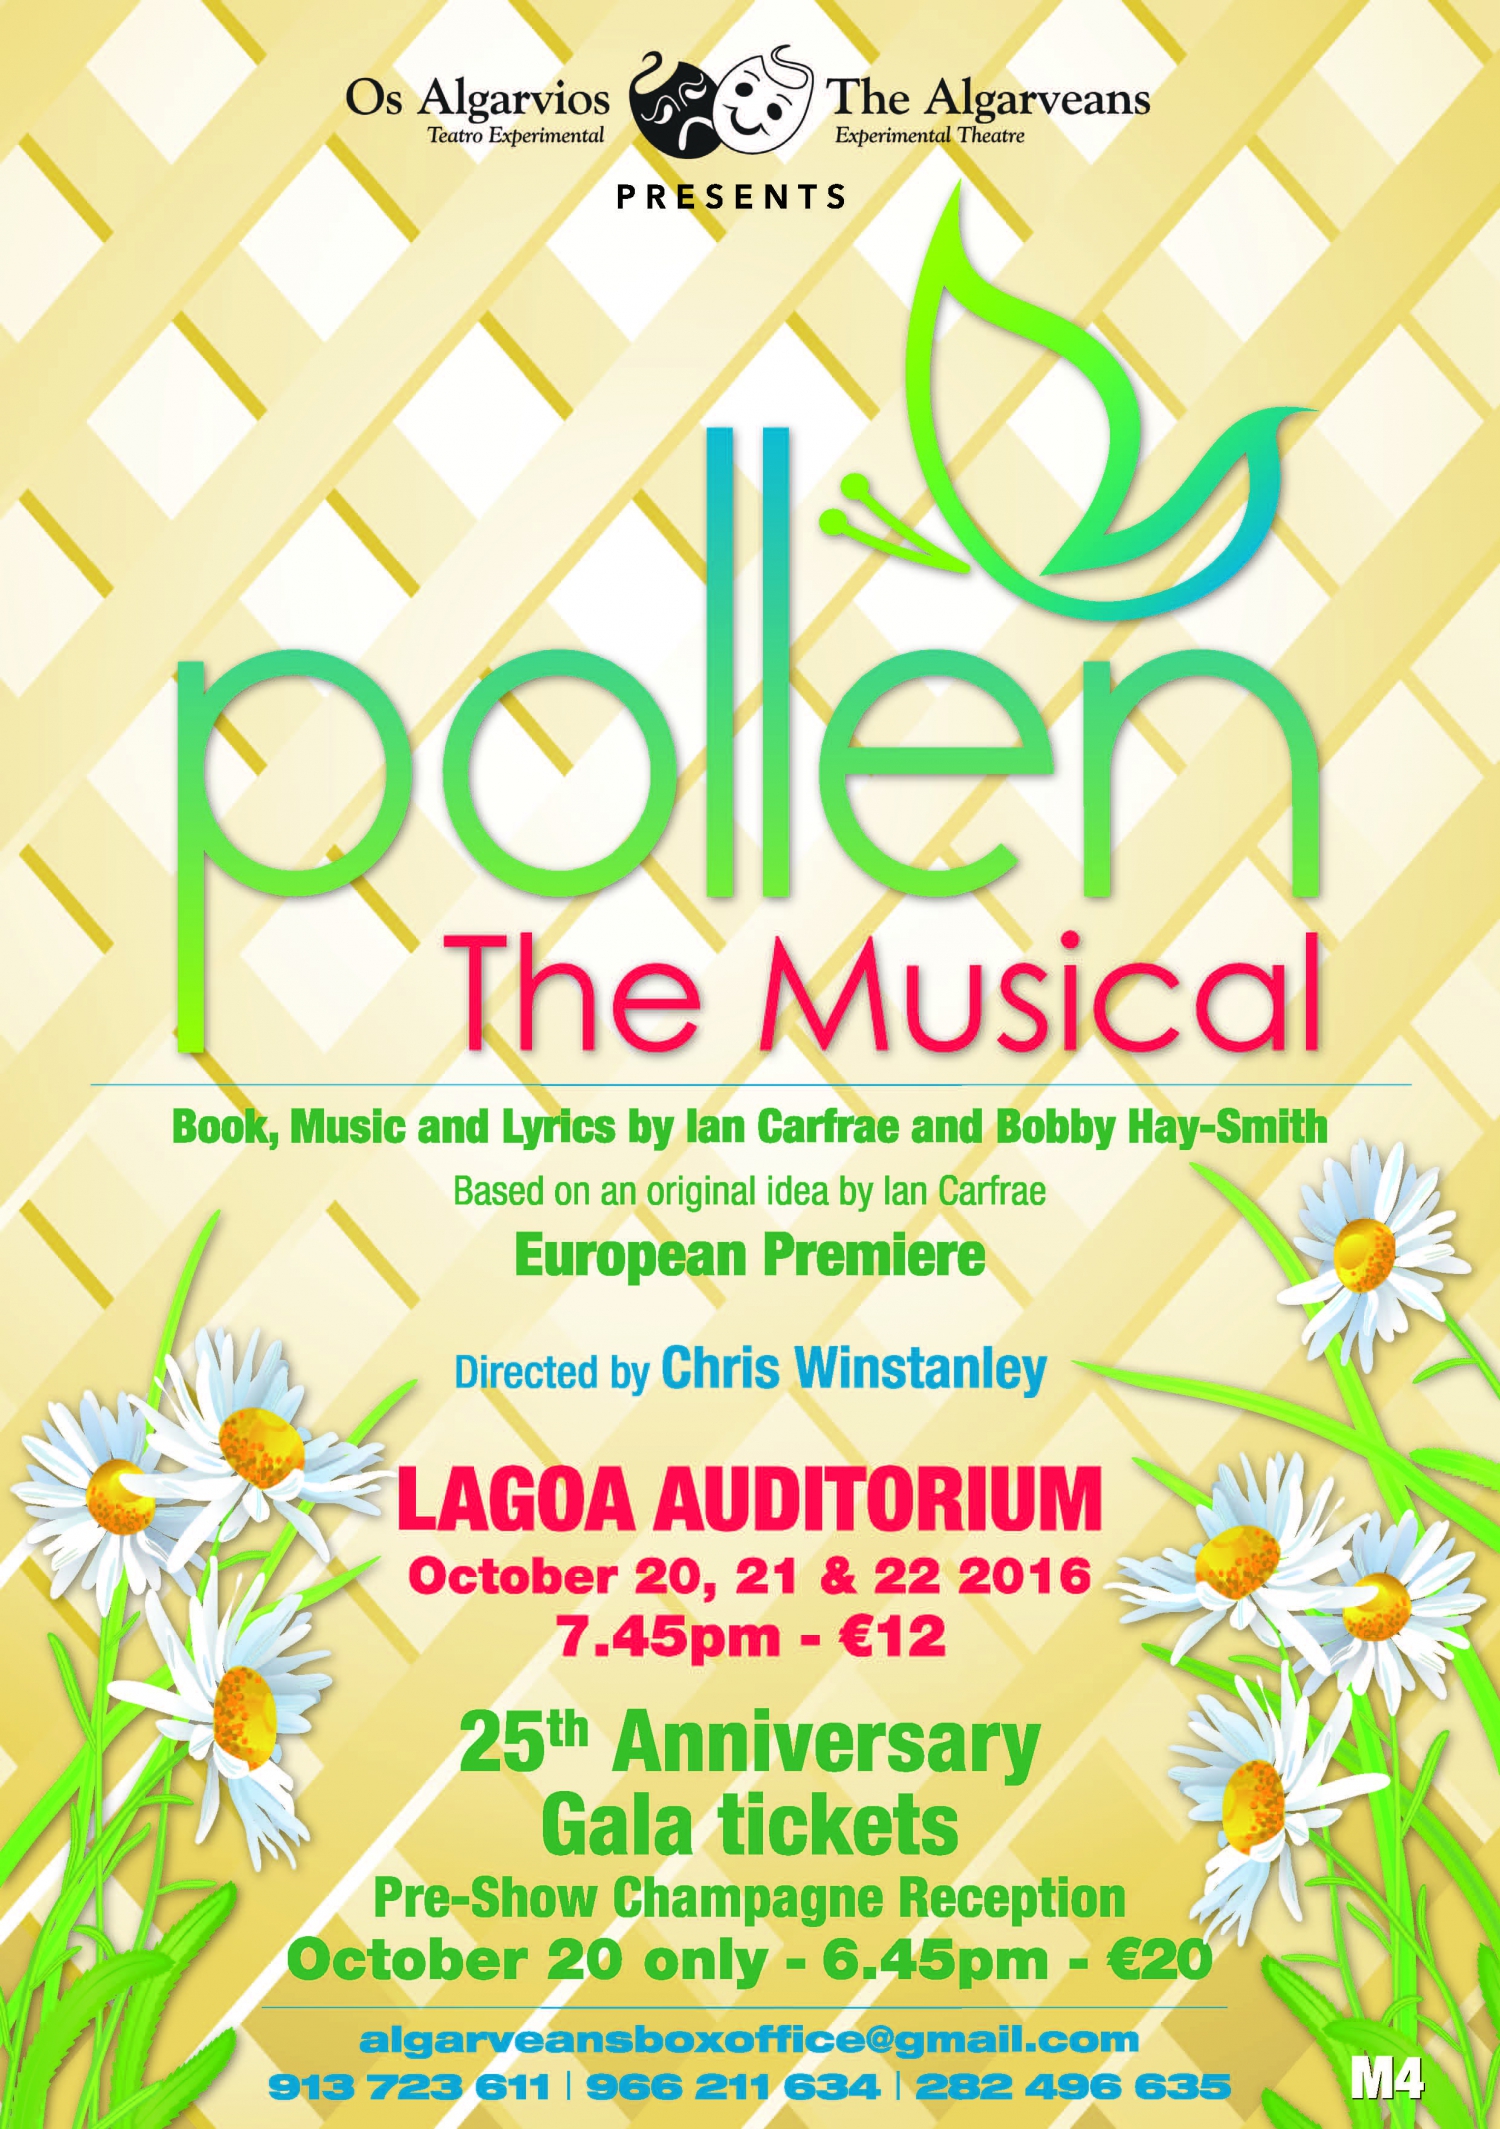 Pollen - the Musical